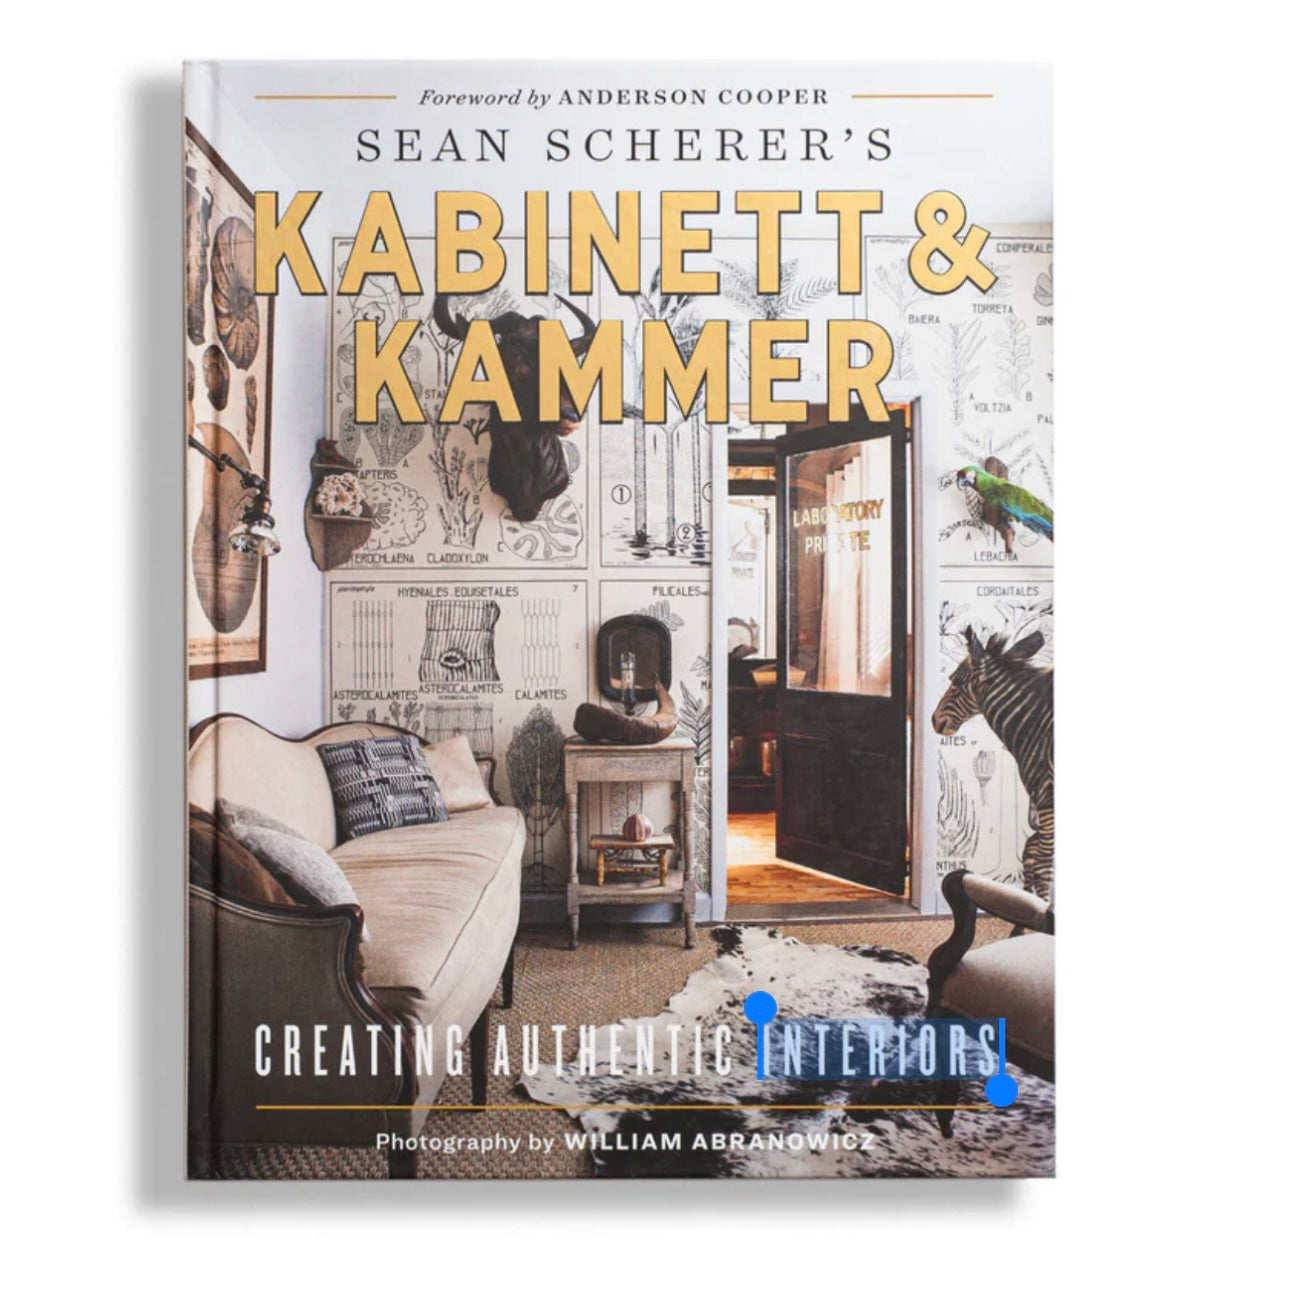 SEAN SCHERER’S KABINETT &  KAMMER - CREATING AUTHENTIC INTERIORS BOOK